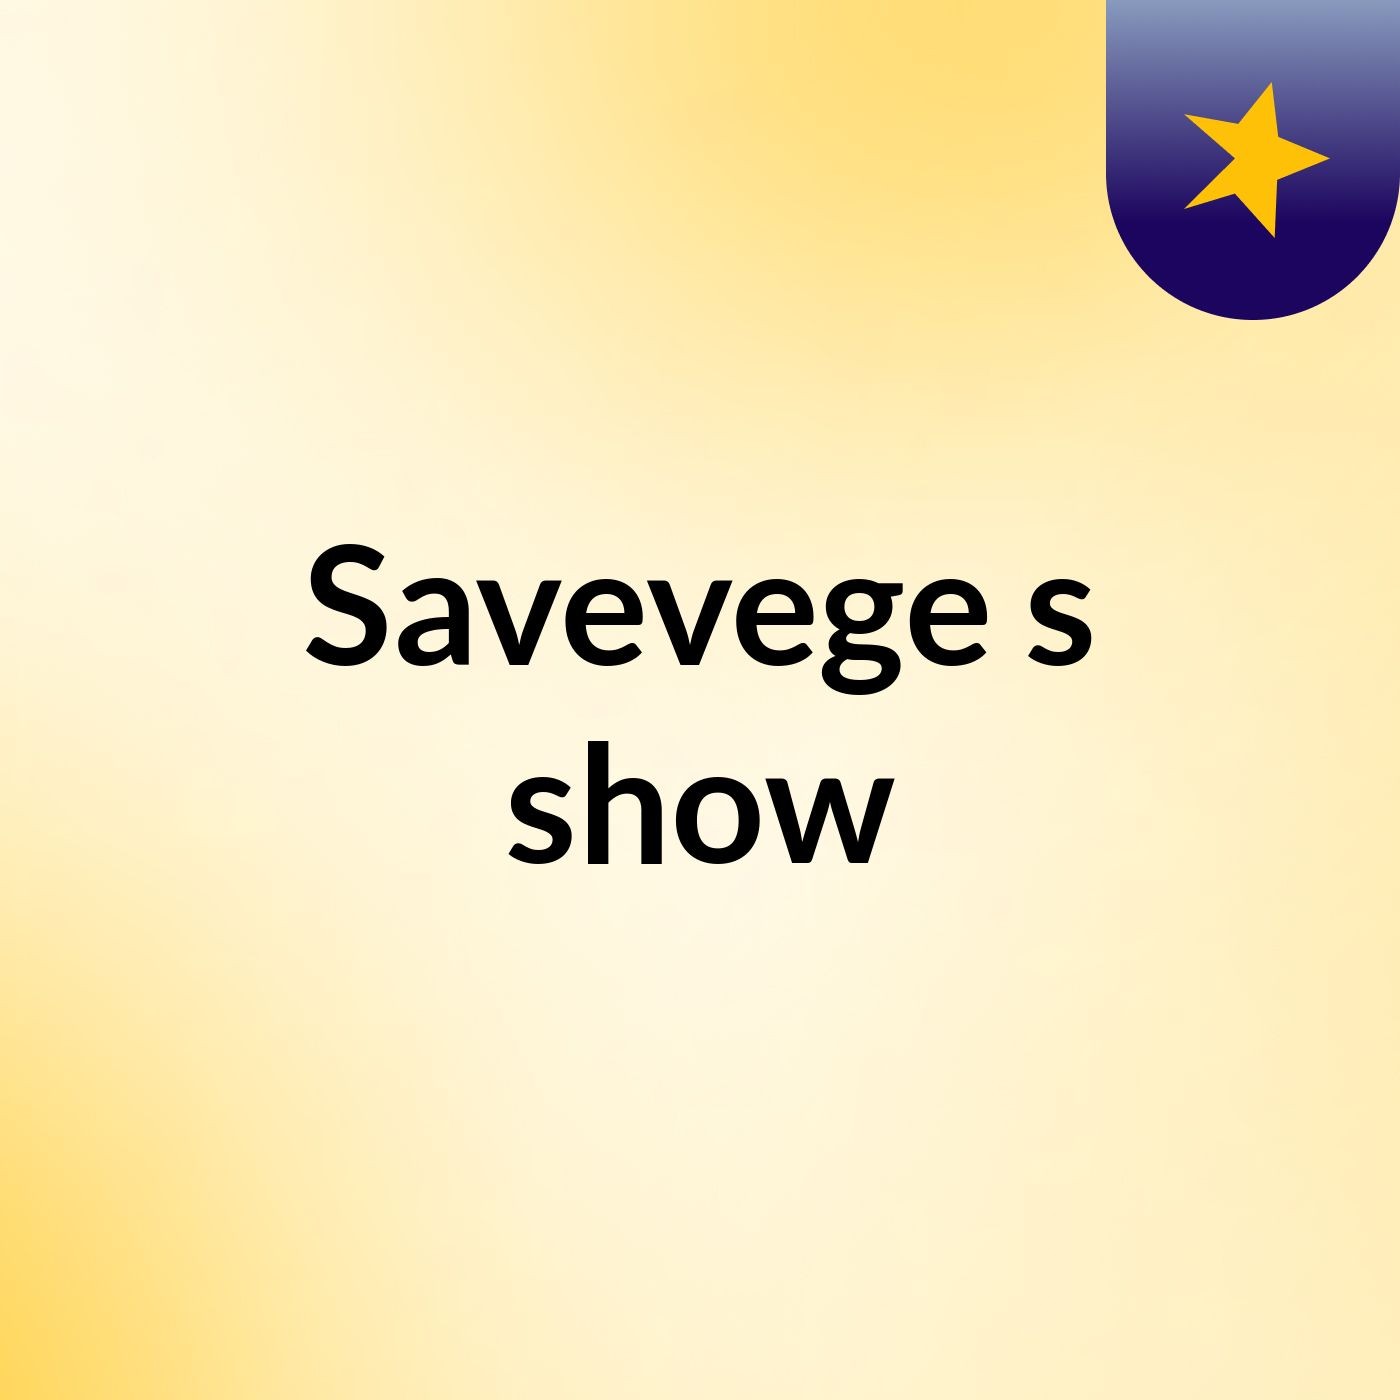 Savevege's show